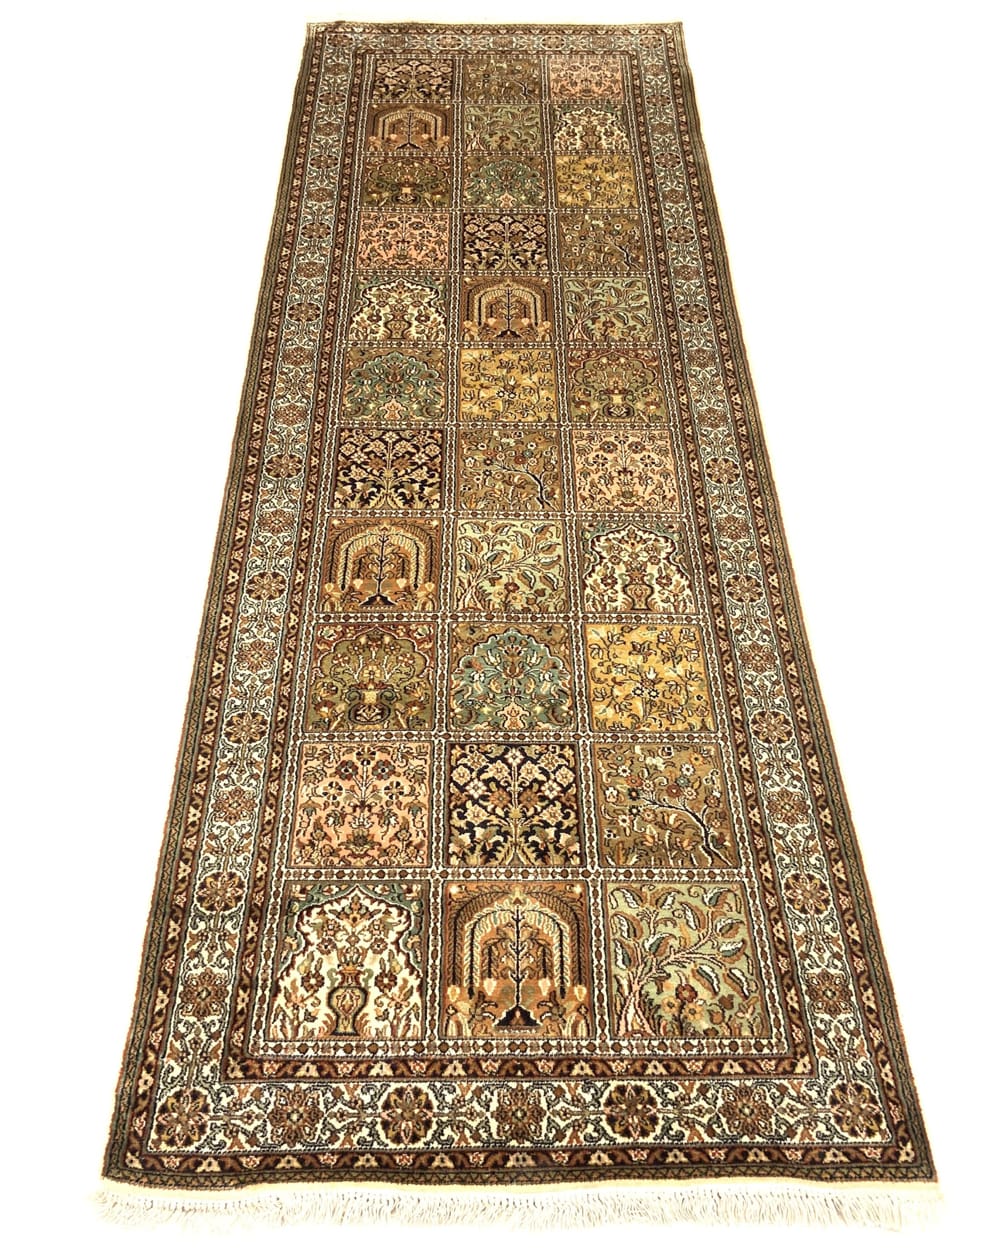 Rug# 31616, Srinagar Kashmir silk in classic garden design, 100% Pure silk pile on a cotton warp & weft cords 500,000 knots per square meter, size 244x80 cm (1)